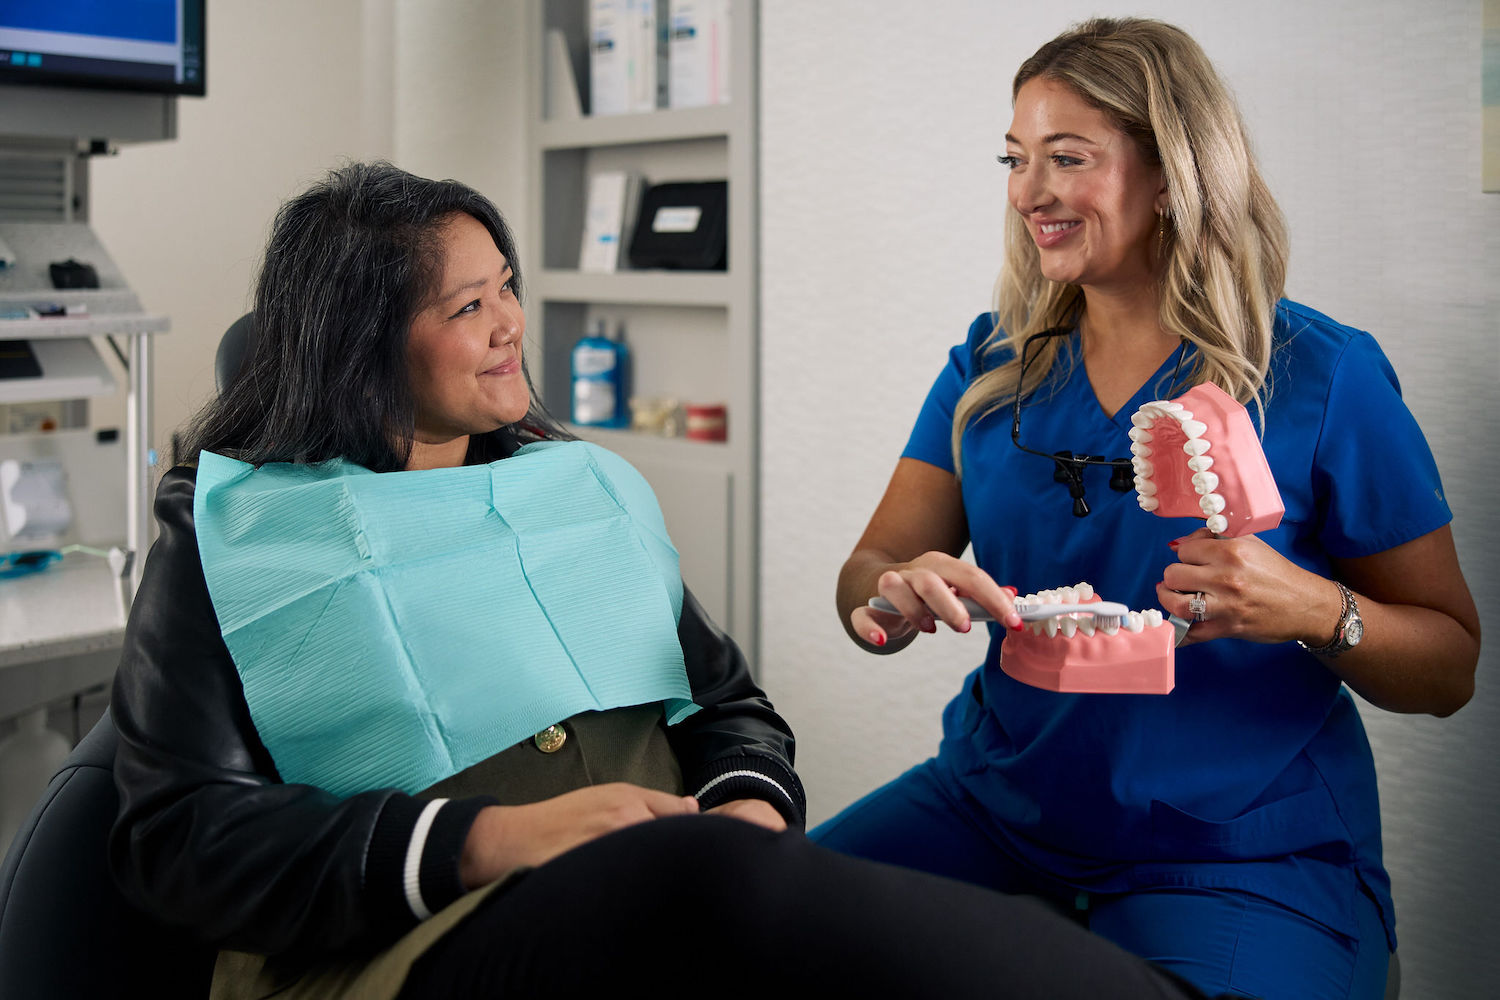 tooth sensitivity, provider at CarolinasDentist educates patient